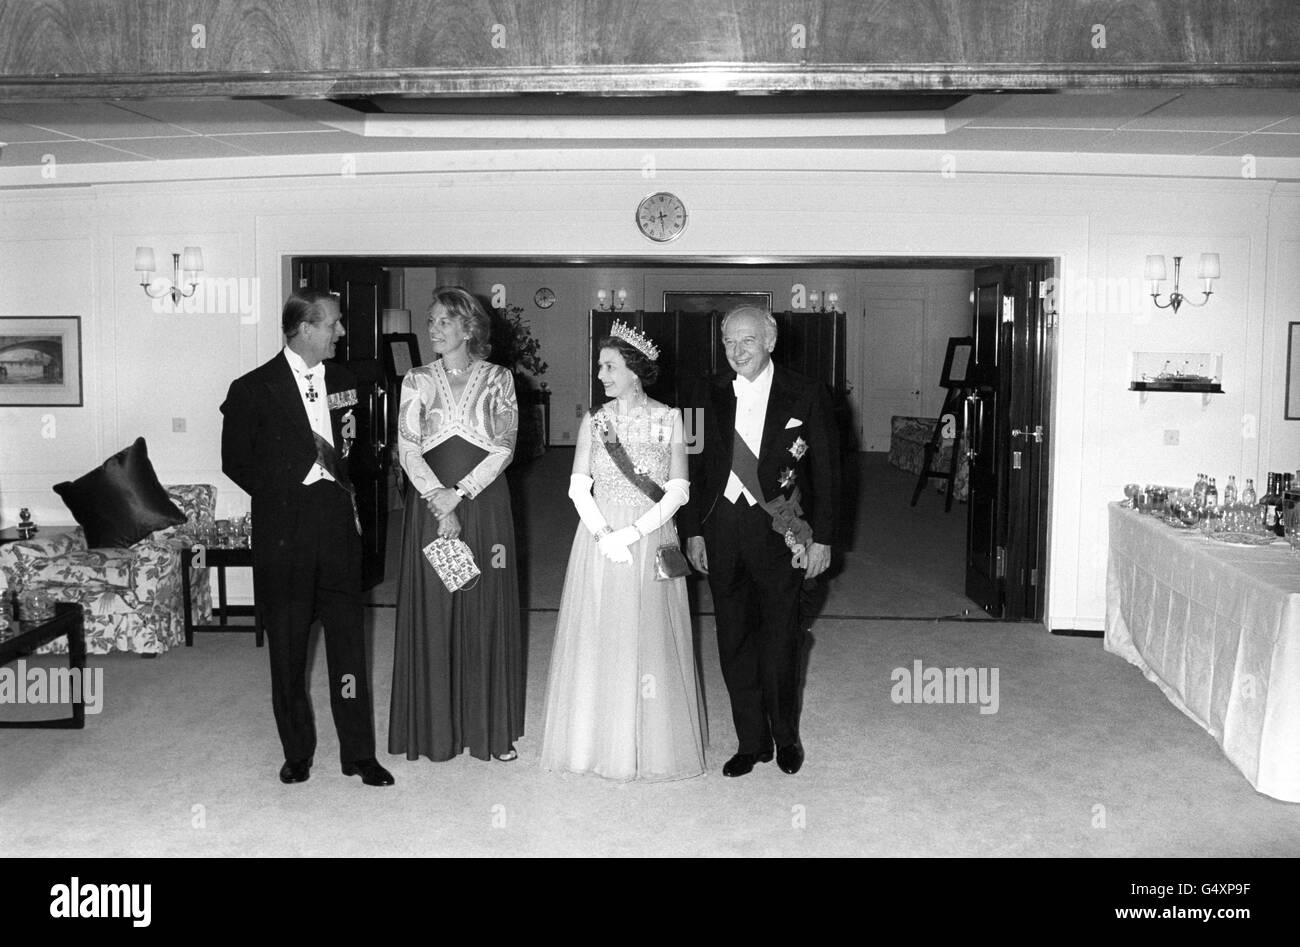 Royalty - Queen Elizabeth II Visita di Stato in Germania Ovest Foto Stock